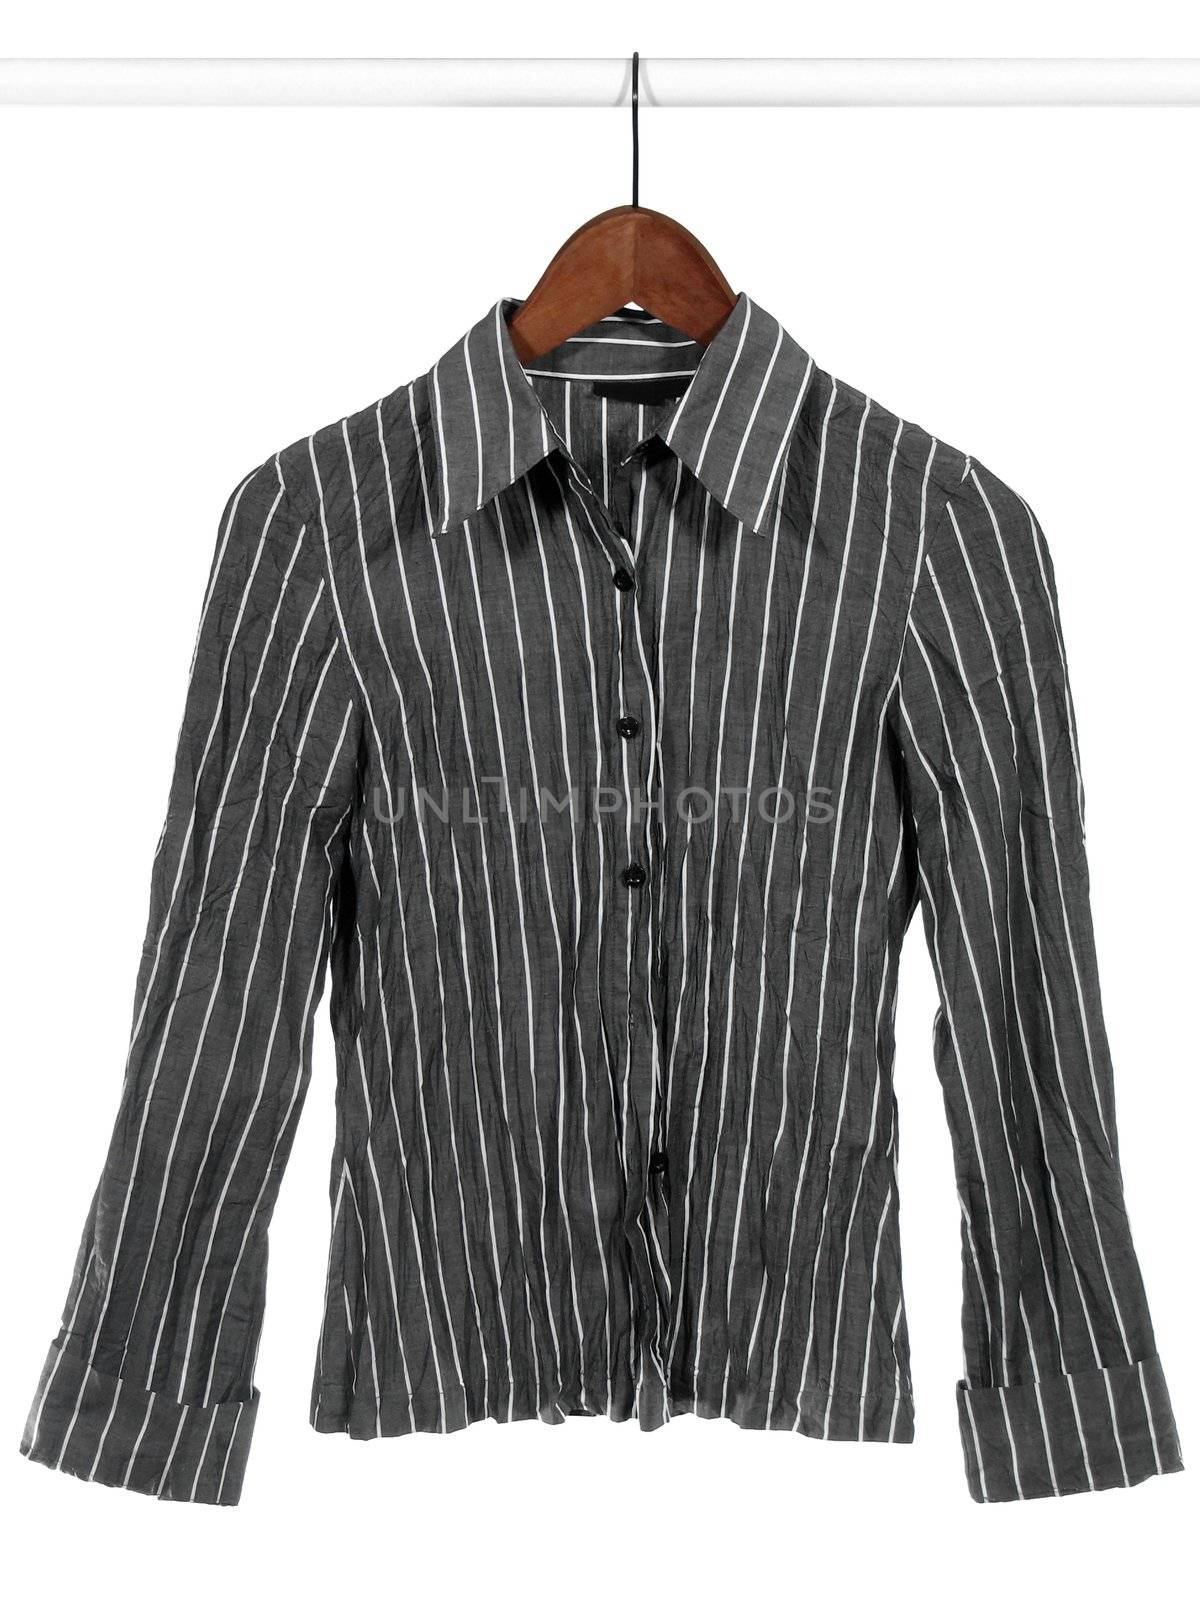 Gray striped shirt on white background by anikasalsera